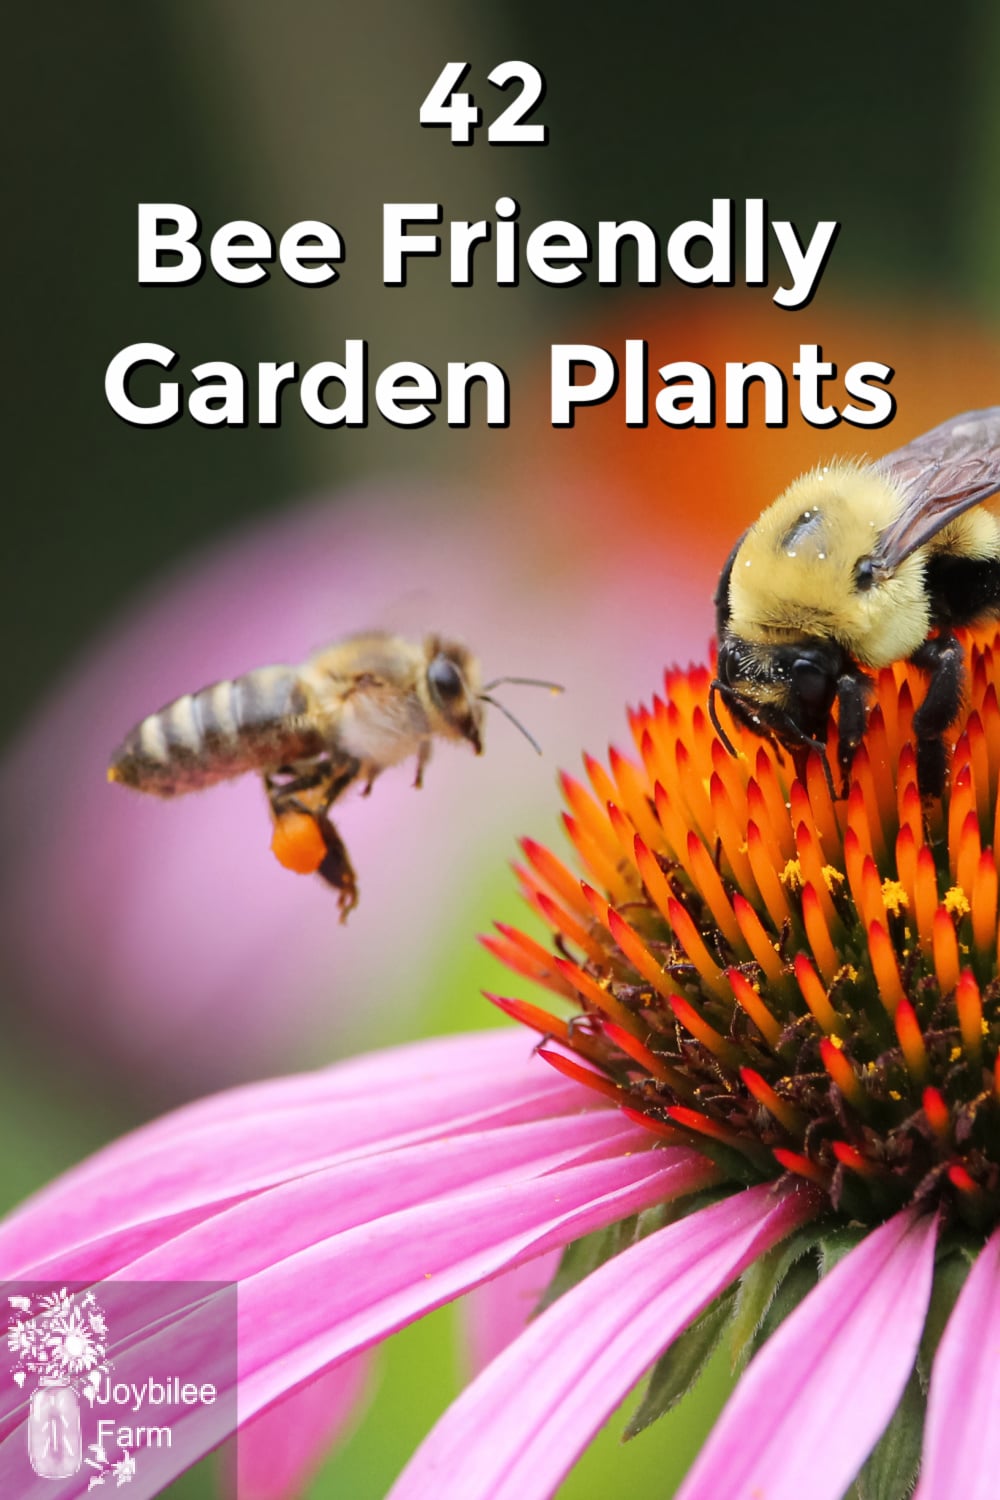 42 Bee Friendly Garden Plants to Create a Pollinator Habitat for Better ...